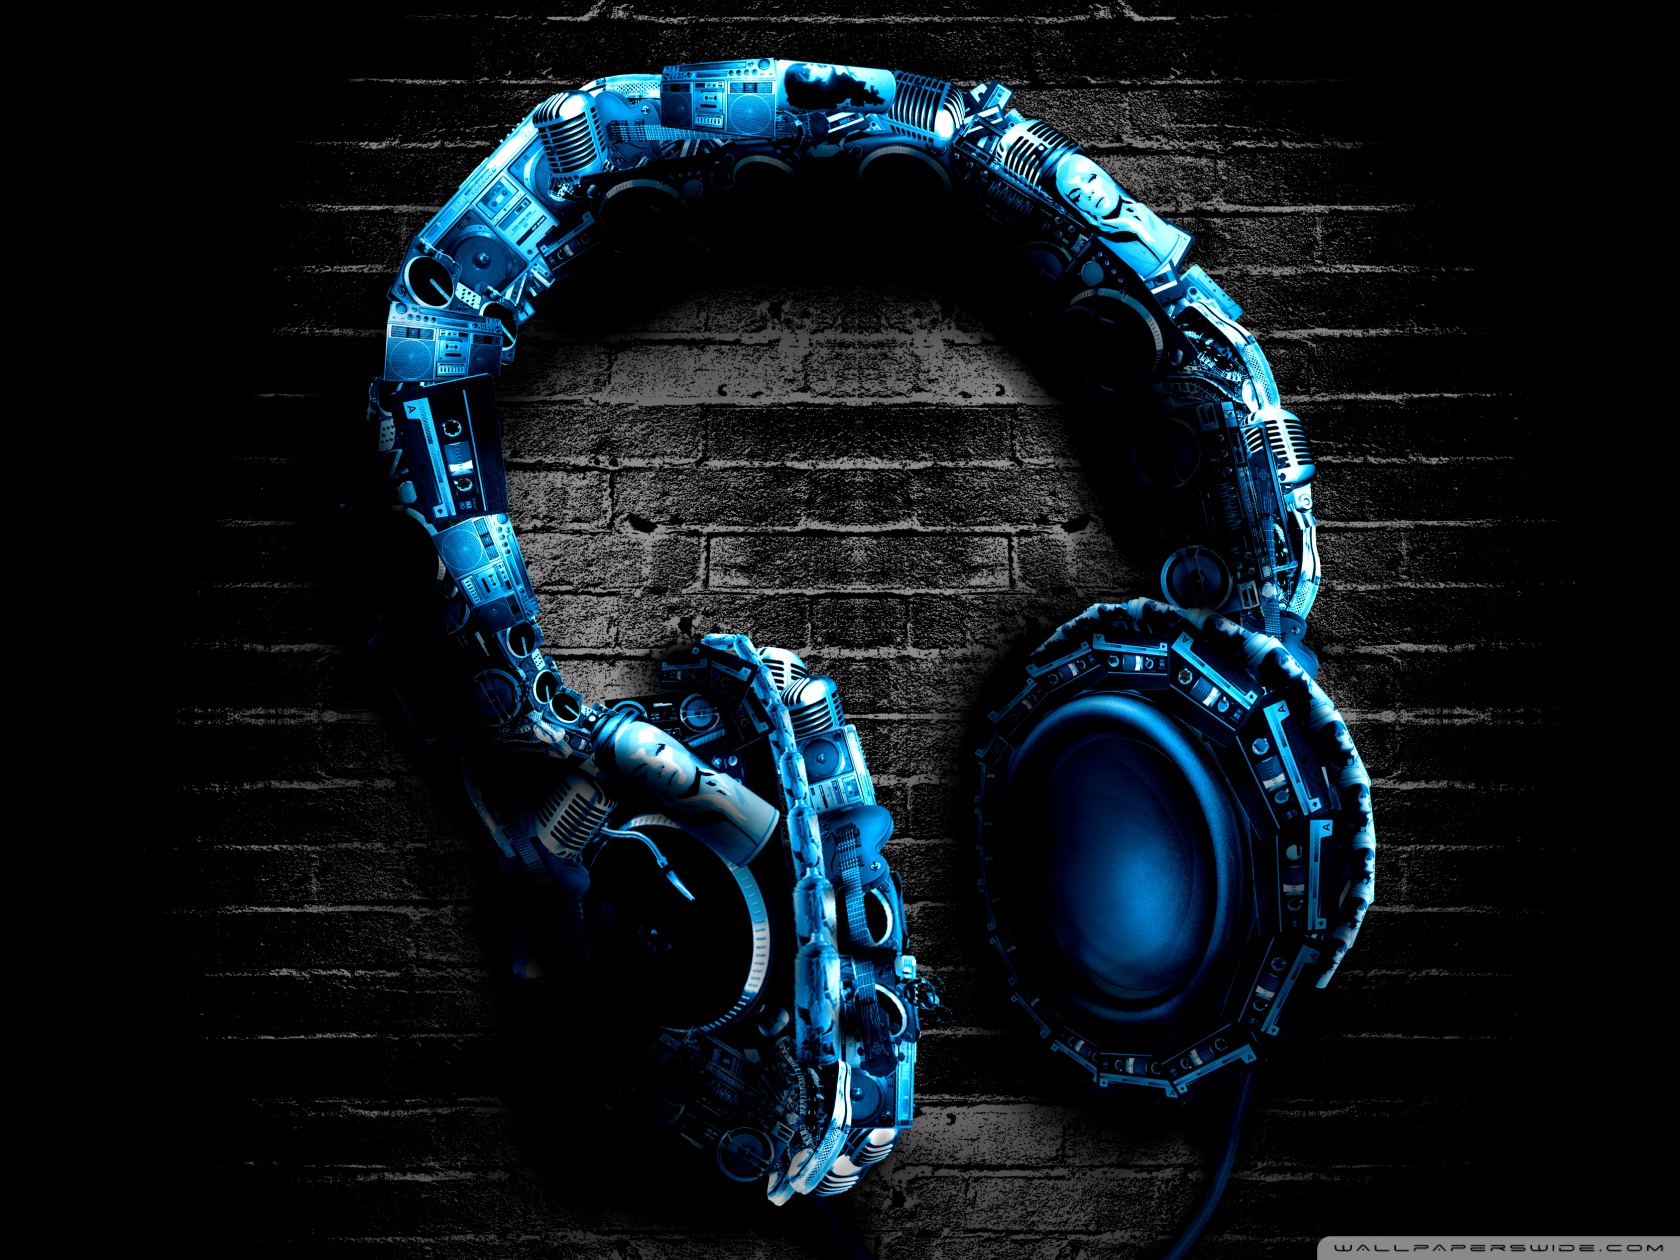 hd wallpapers music headphones